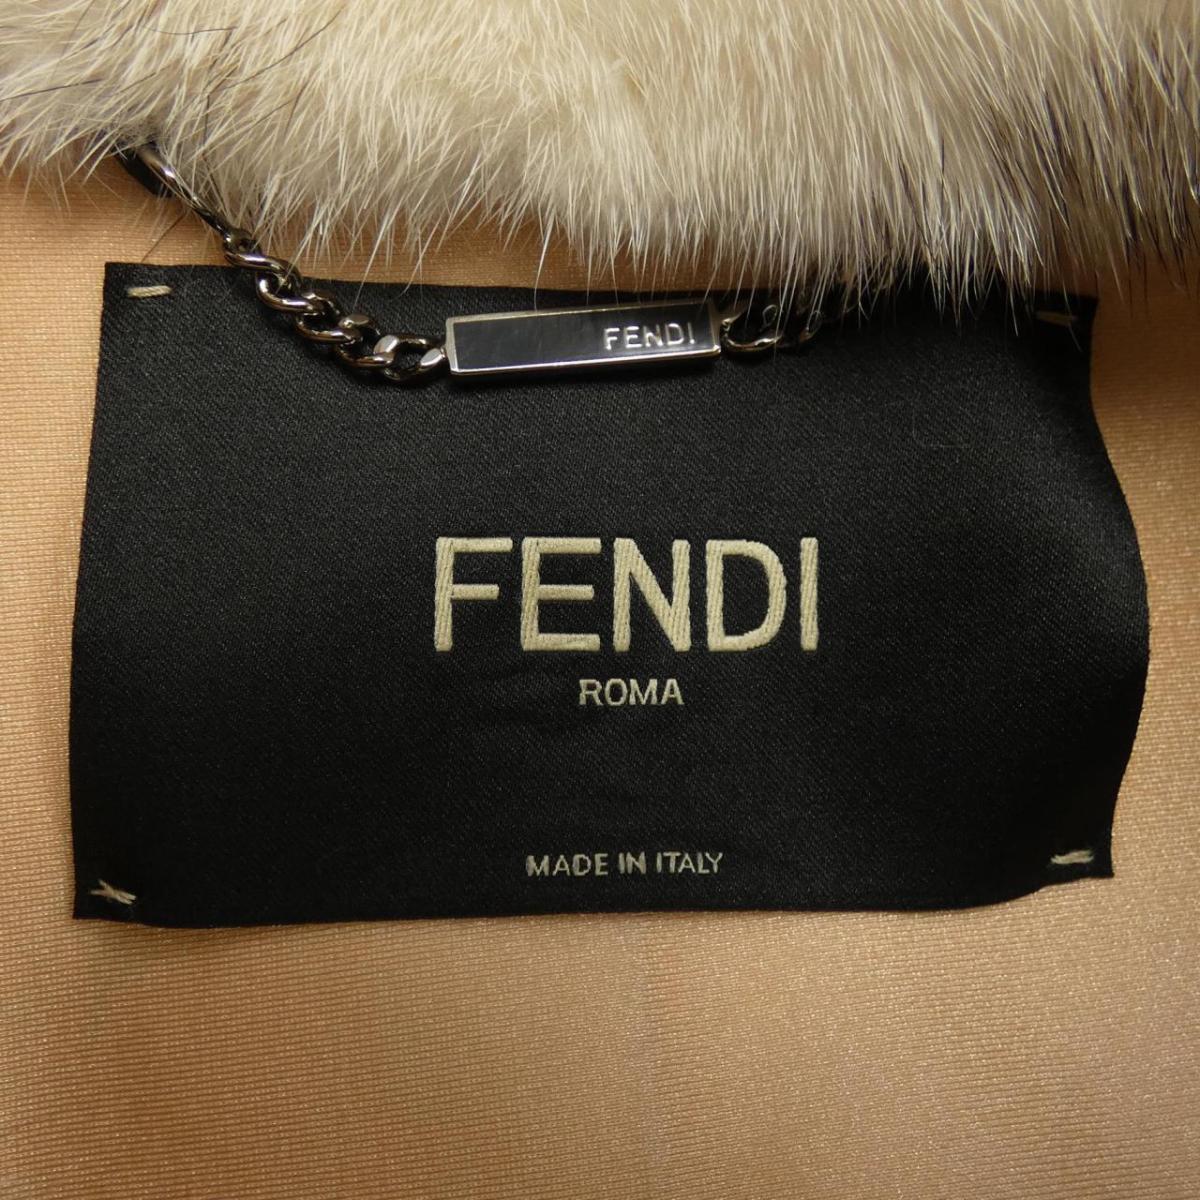 Fendi Fendi injured jacket